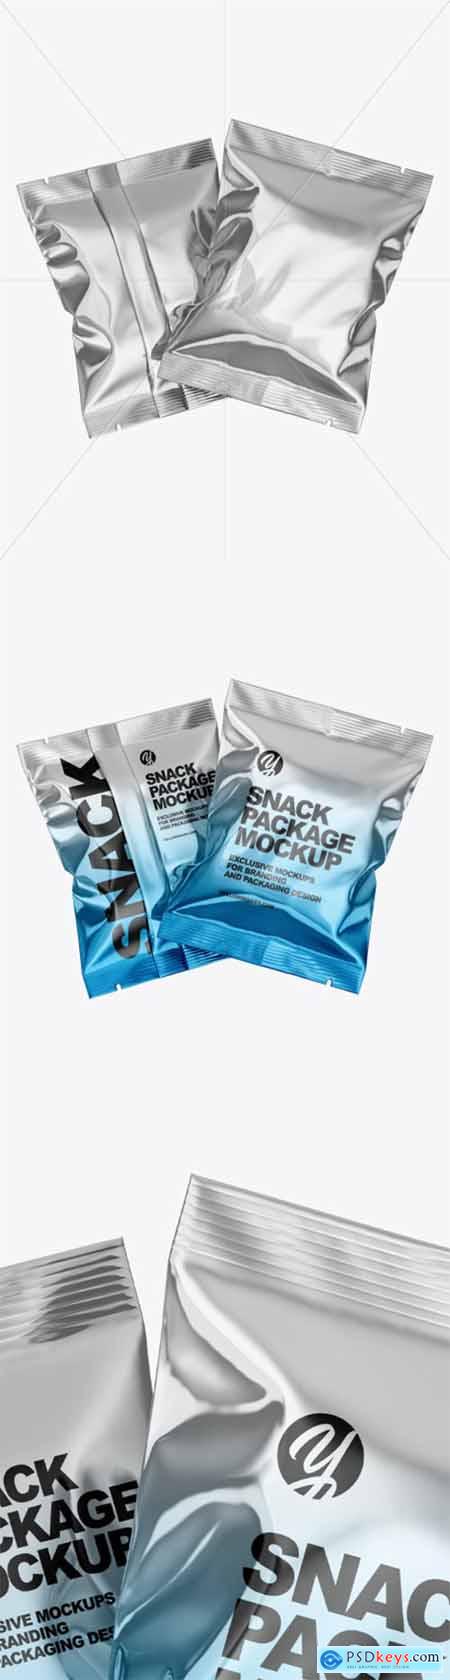 Two Metallic Snack Package Mockup 80510